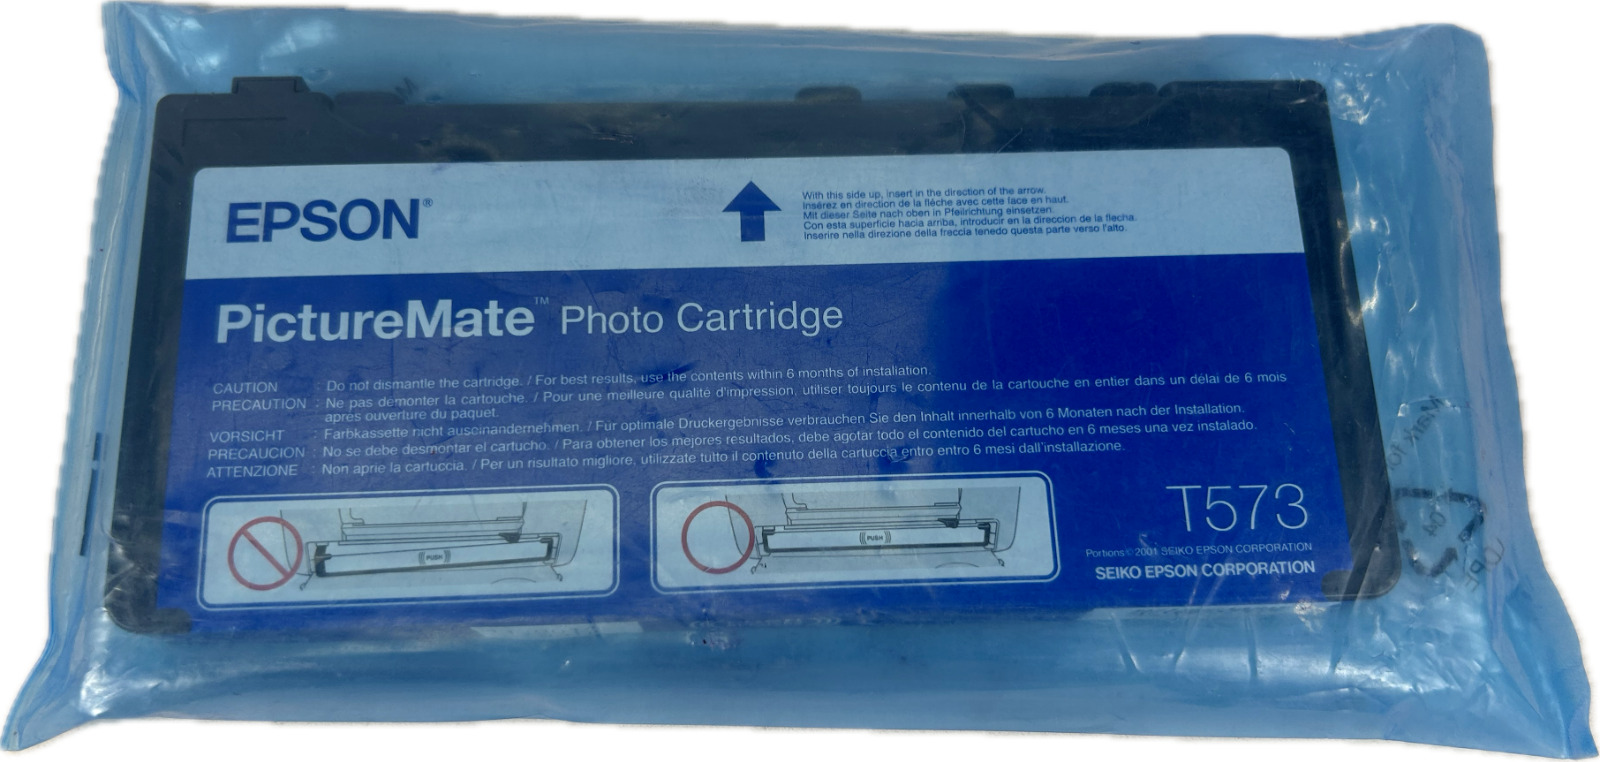 Genuine Epson T573 Cartridge for PictureMate